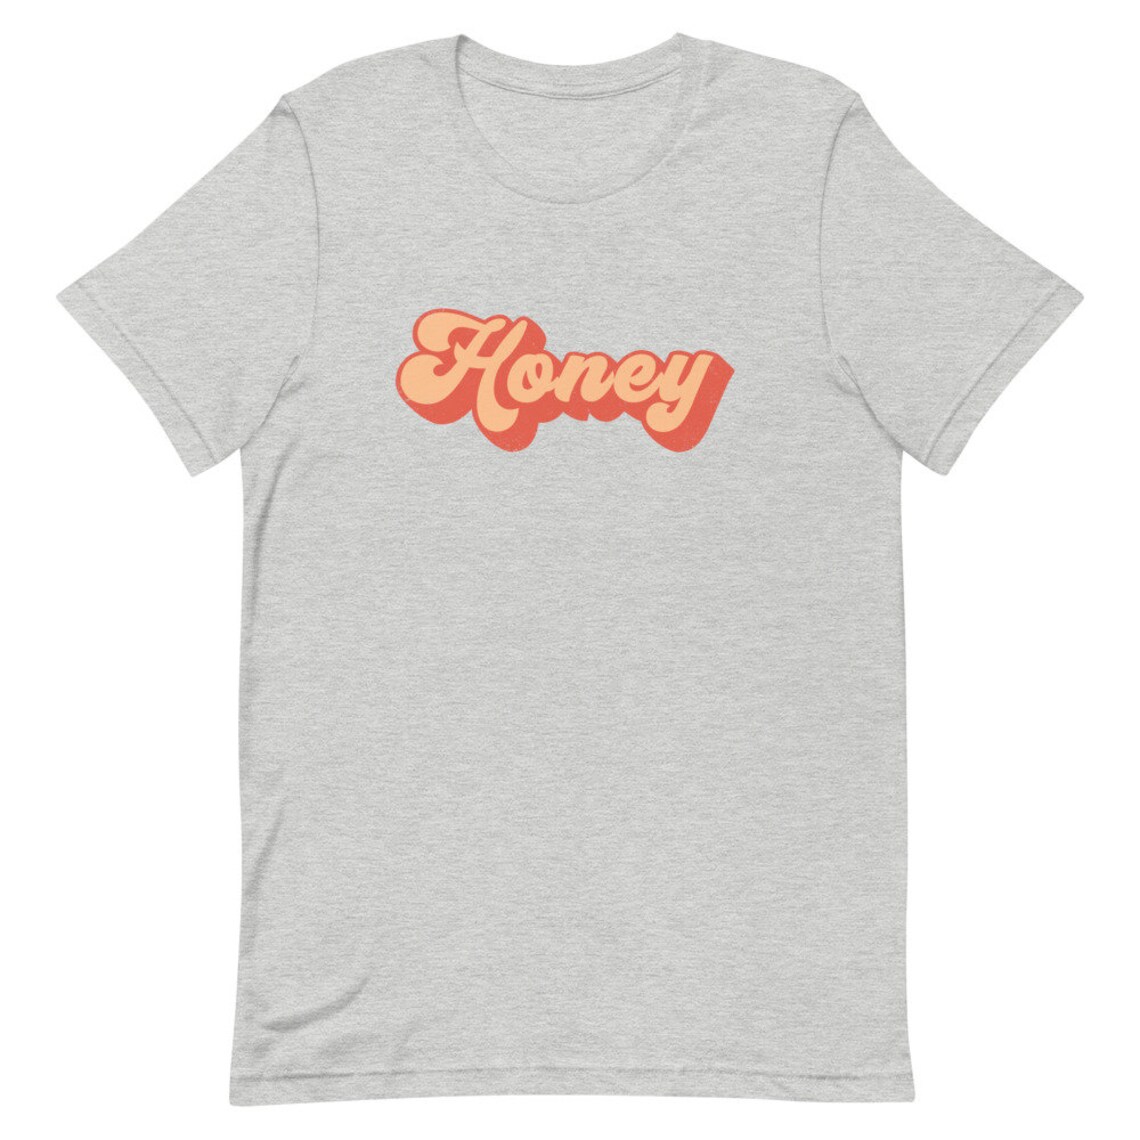 Honey t-shirt Vintage honey graphic shirt women t-shirt | Etsy